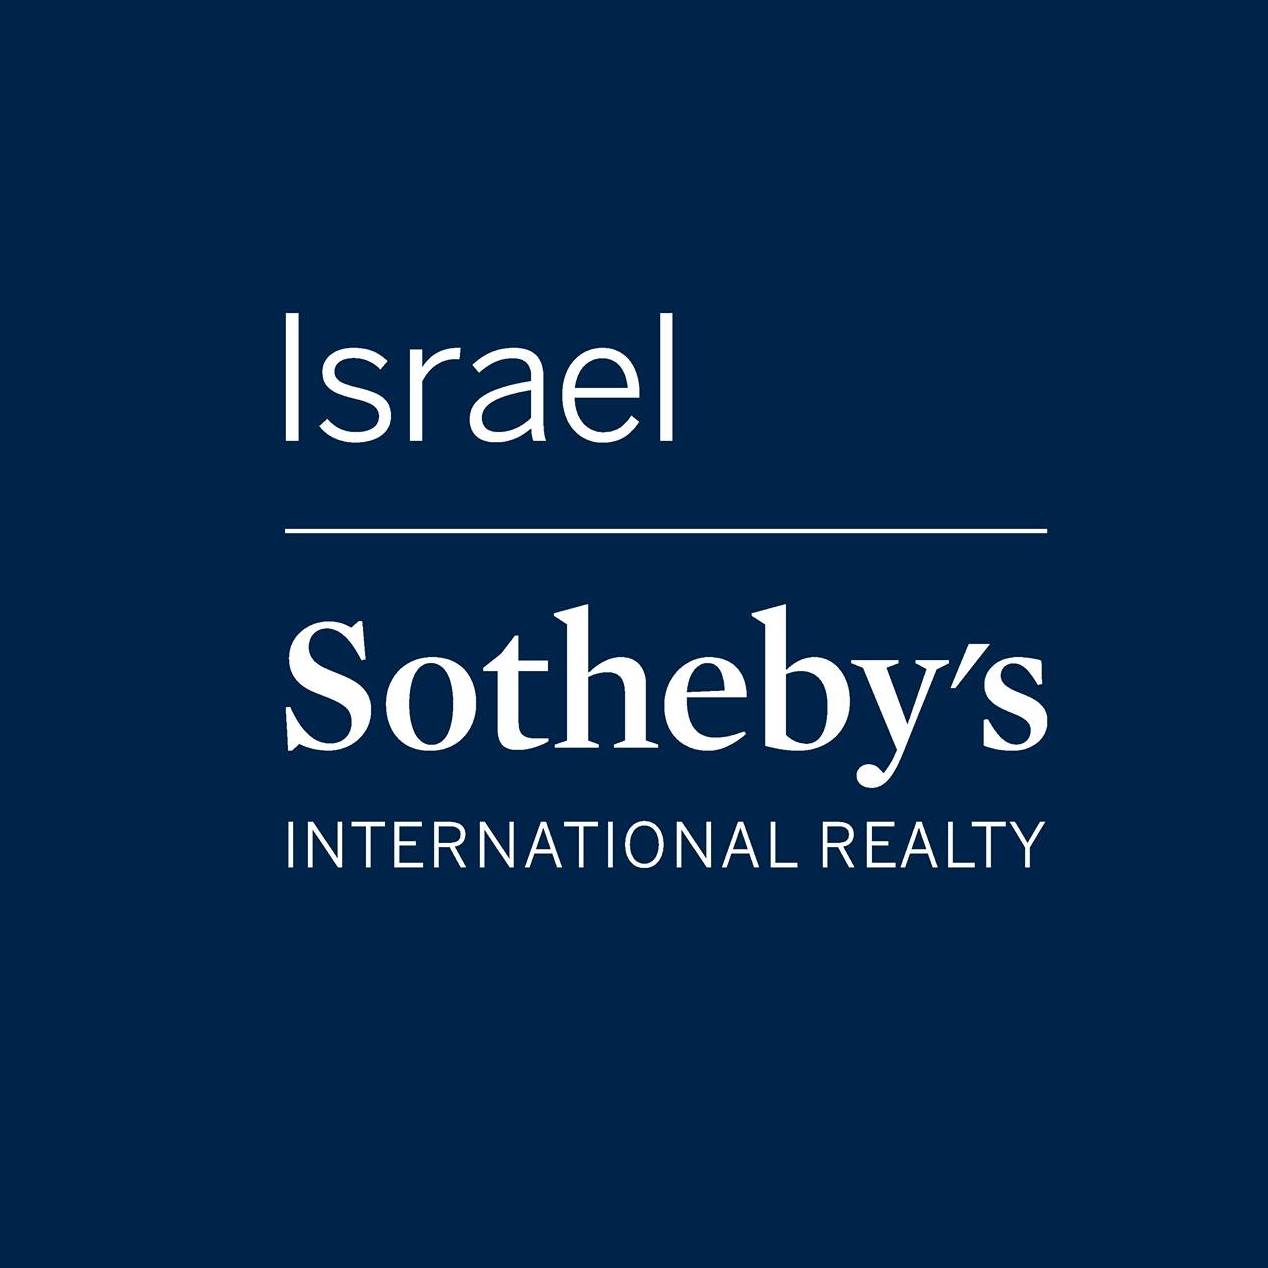 Israel Sotheby's International Realty